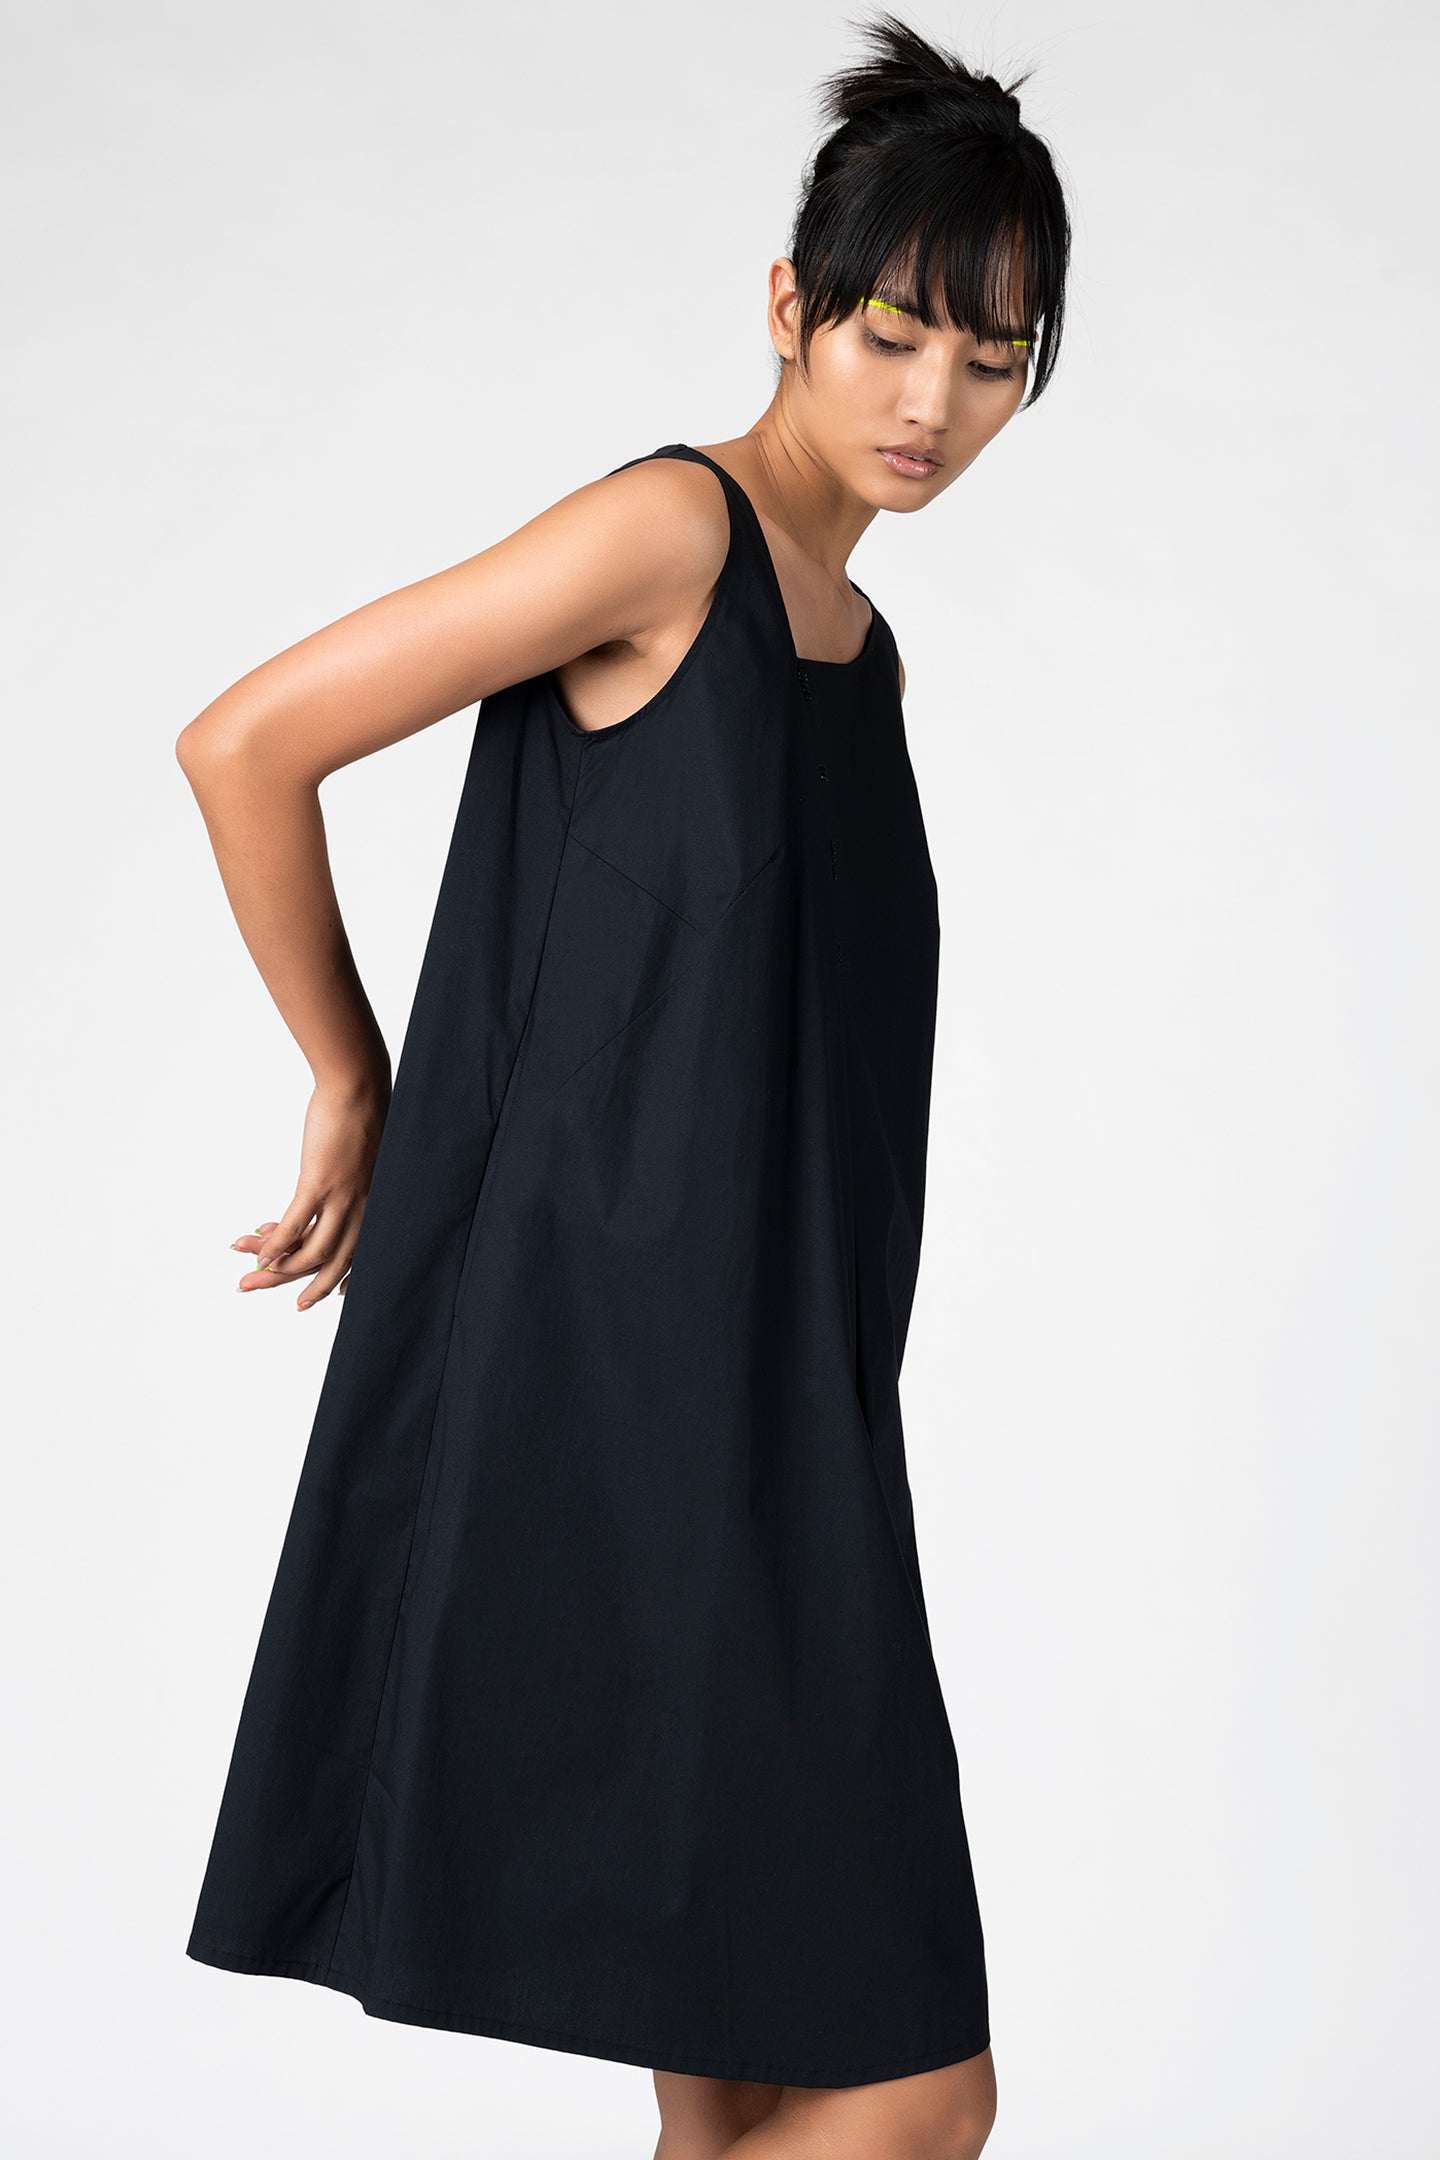 Draped Dress With Asymmetric Neckline - Genes online store 2020